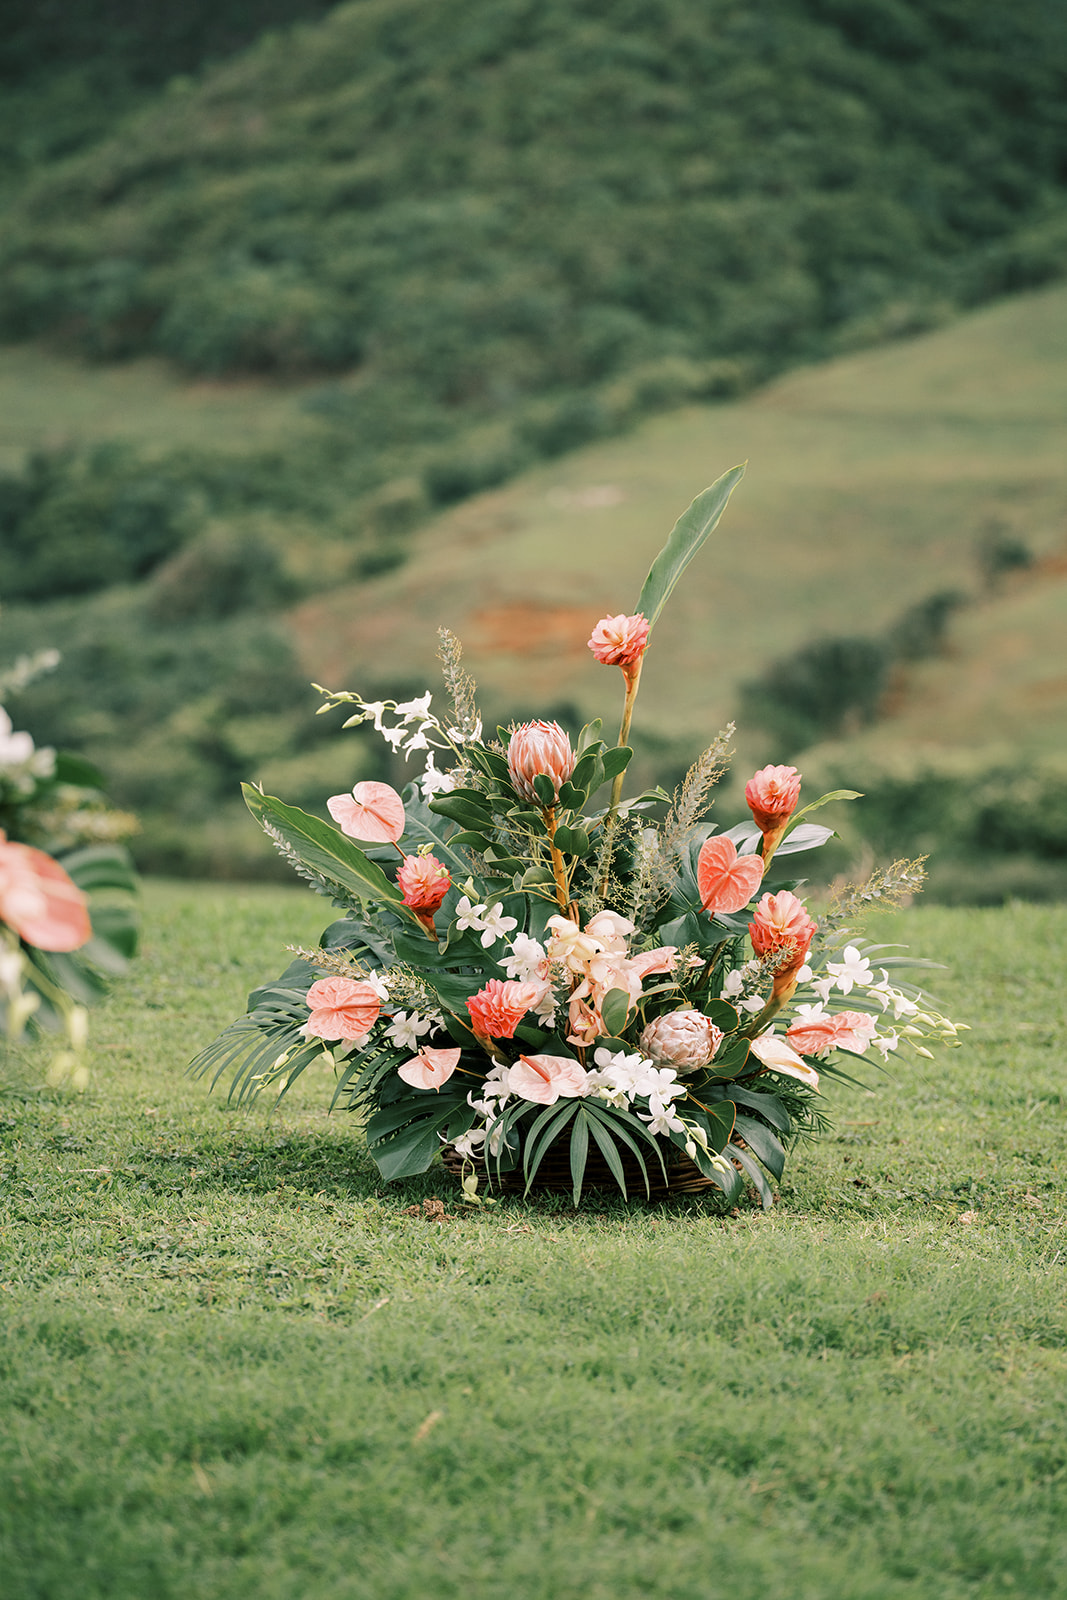 A large arrangement of flowers at Kualoa Ranch, a destination wedding venue, on a grassy field.